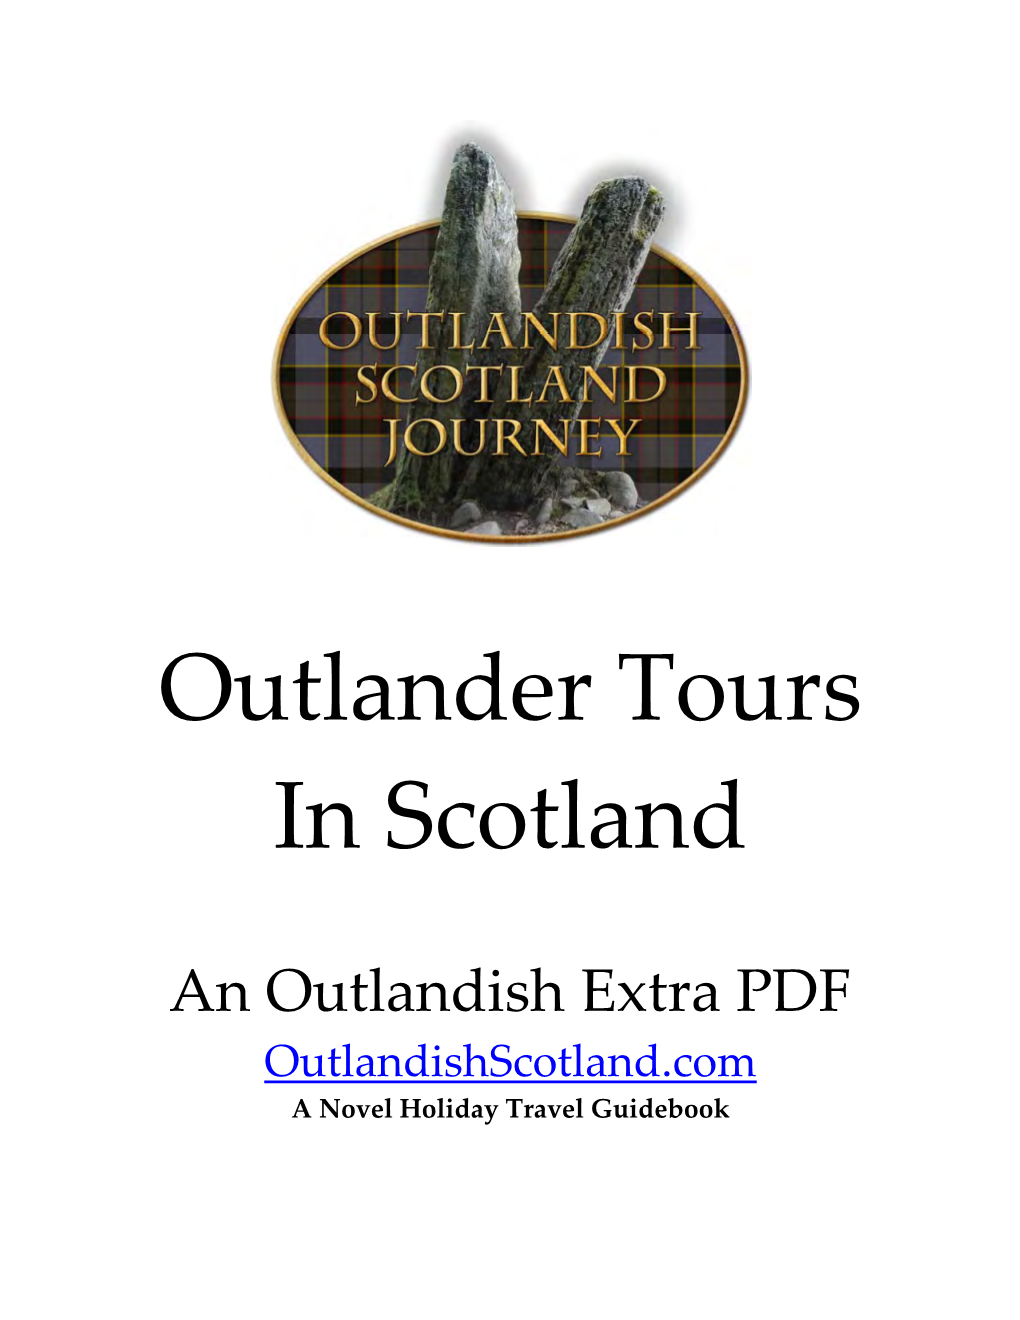 Outlander Tours in Scotland